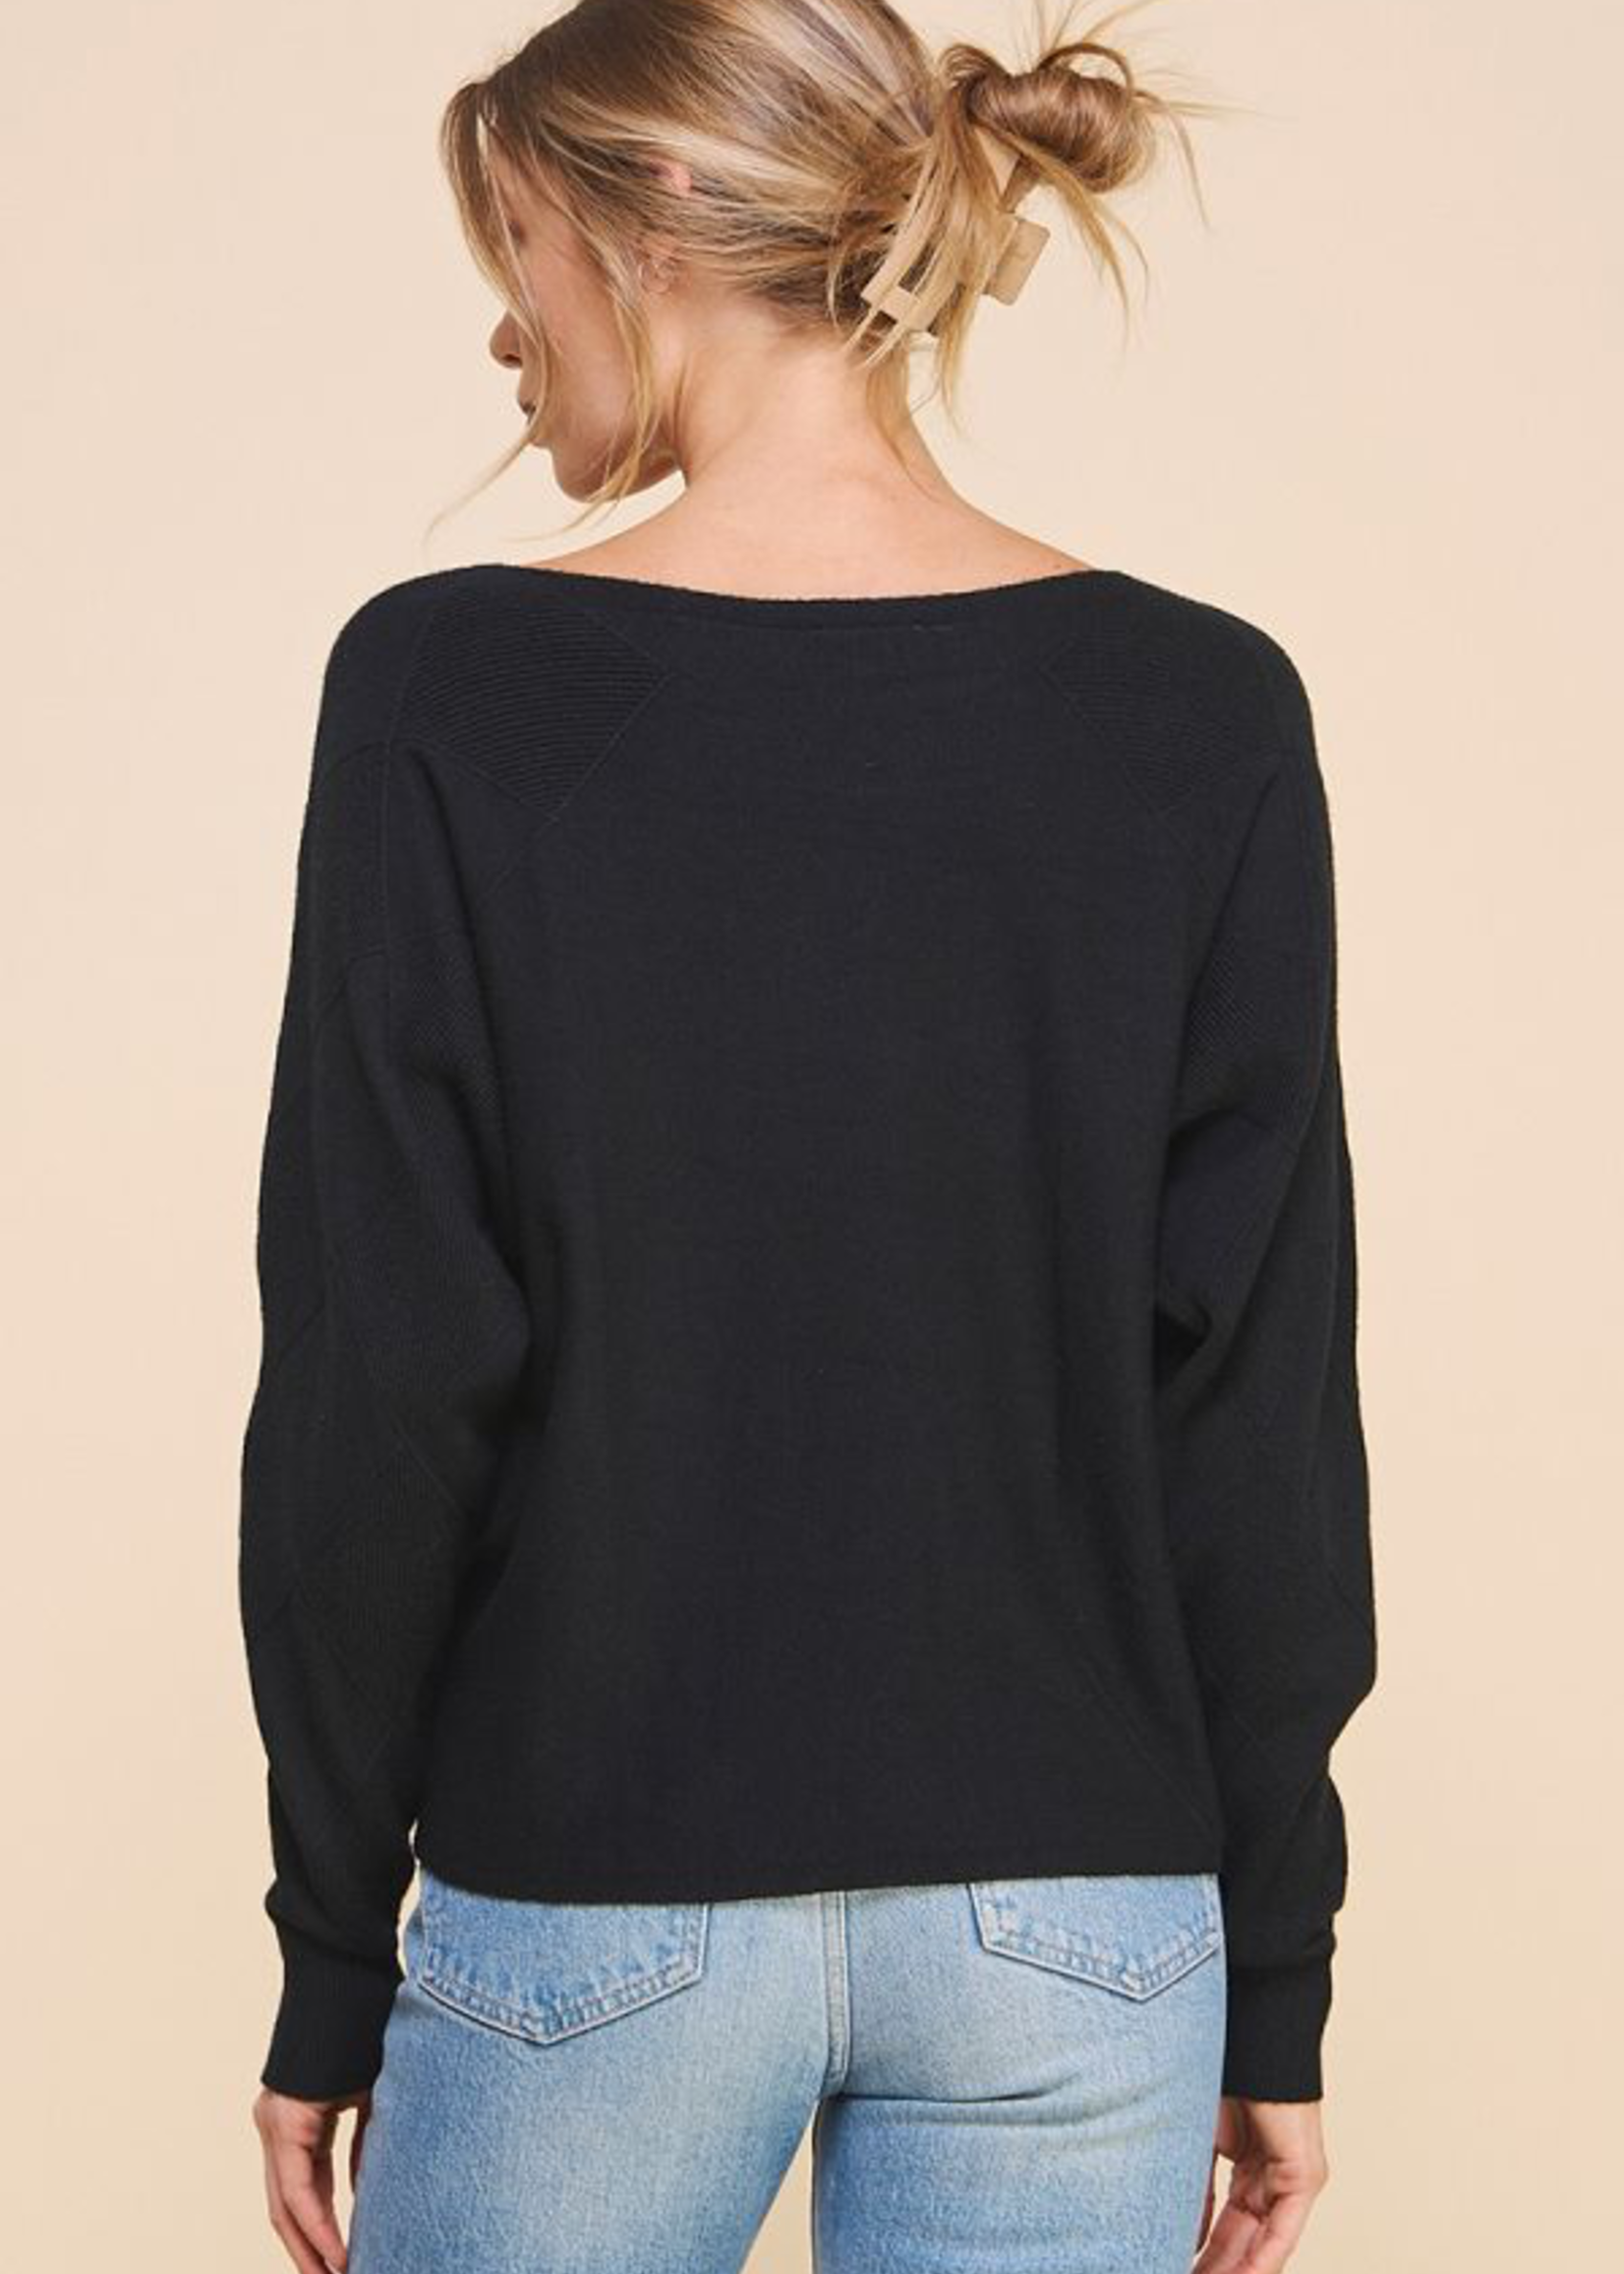 Allie Rose Textured dolman sleeve pullover sweater